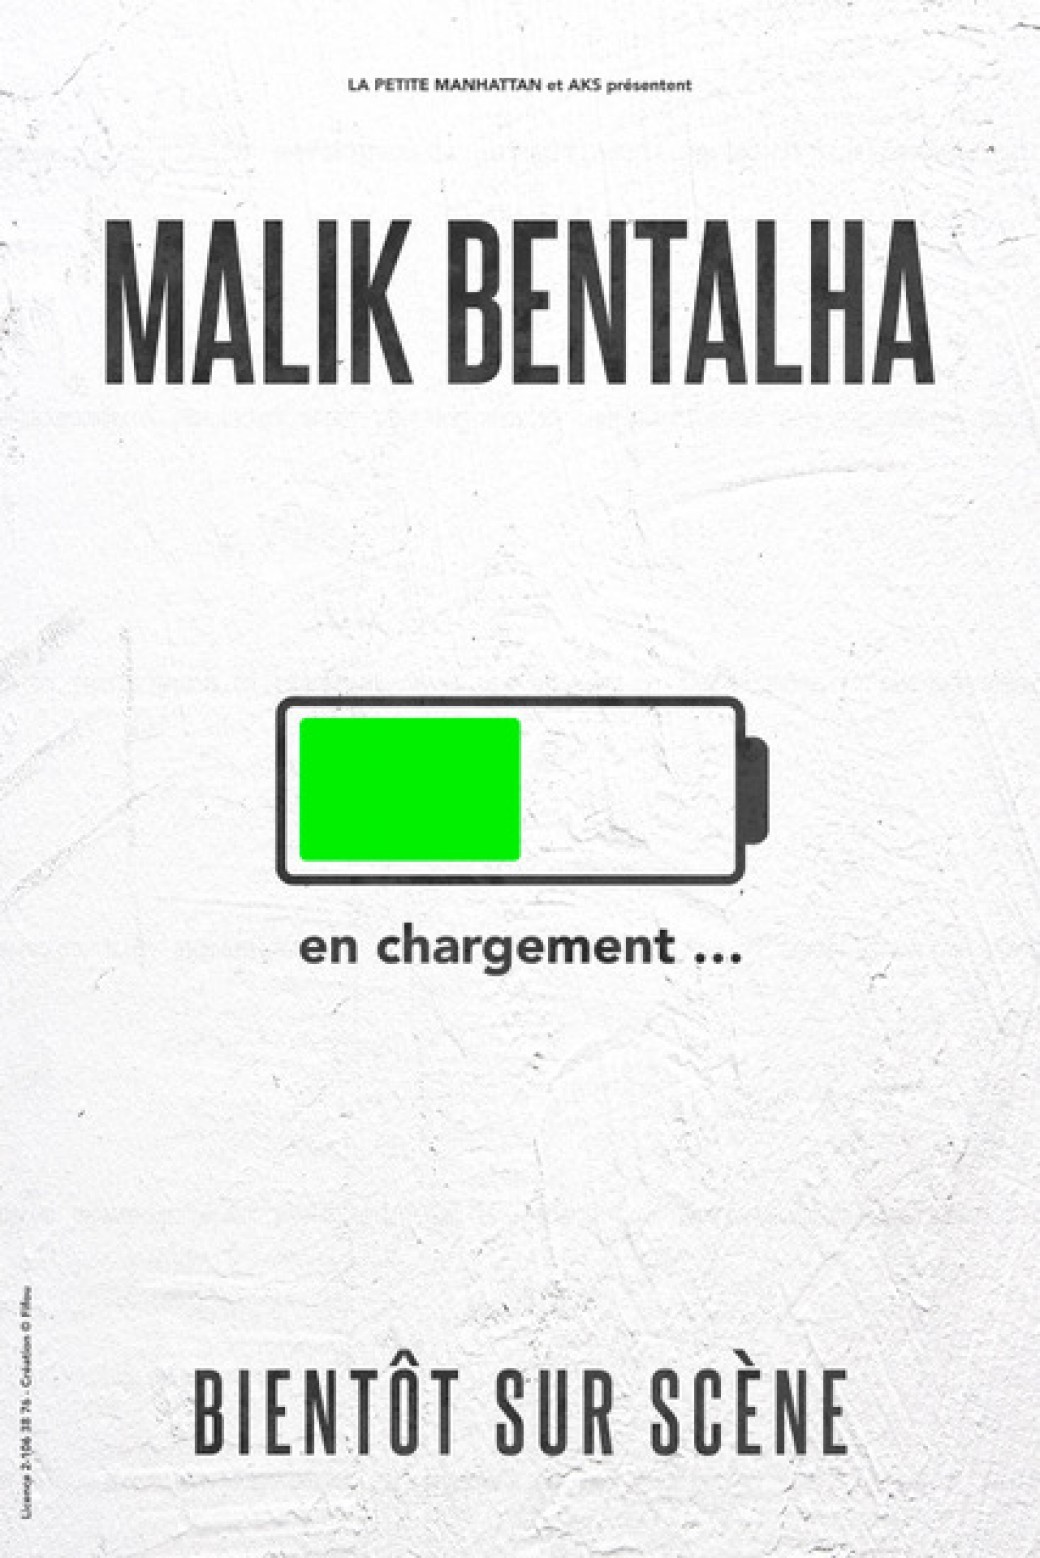 Malik Bentalha dans "En chargement"